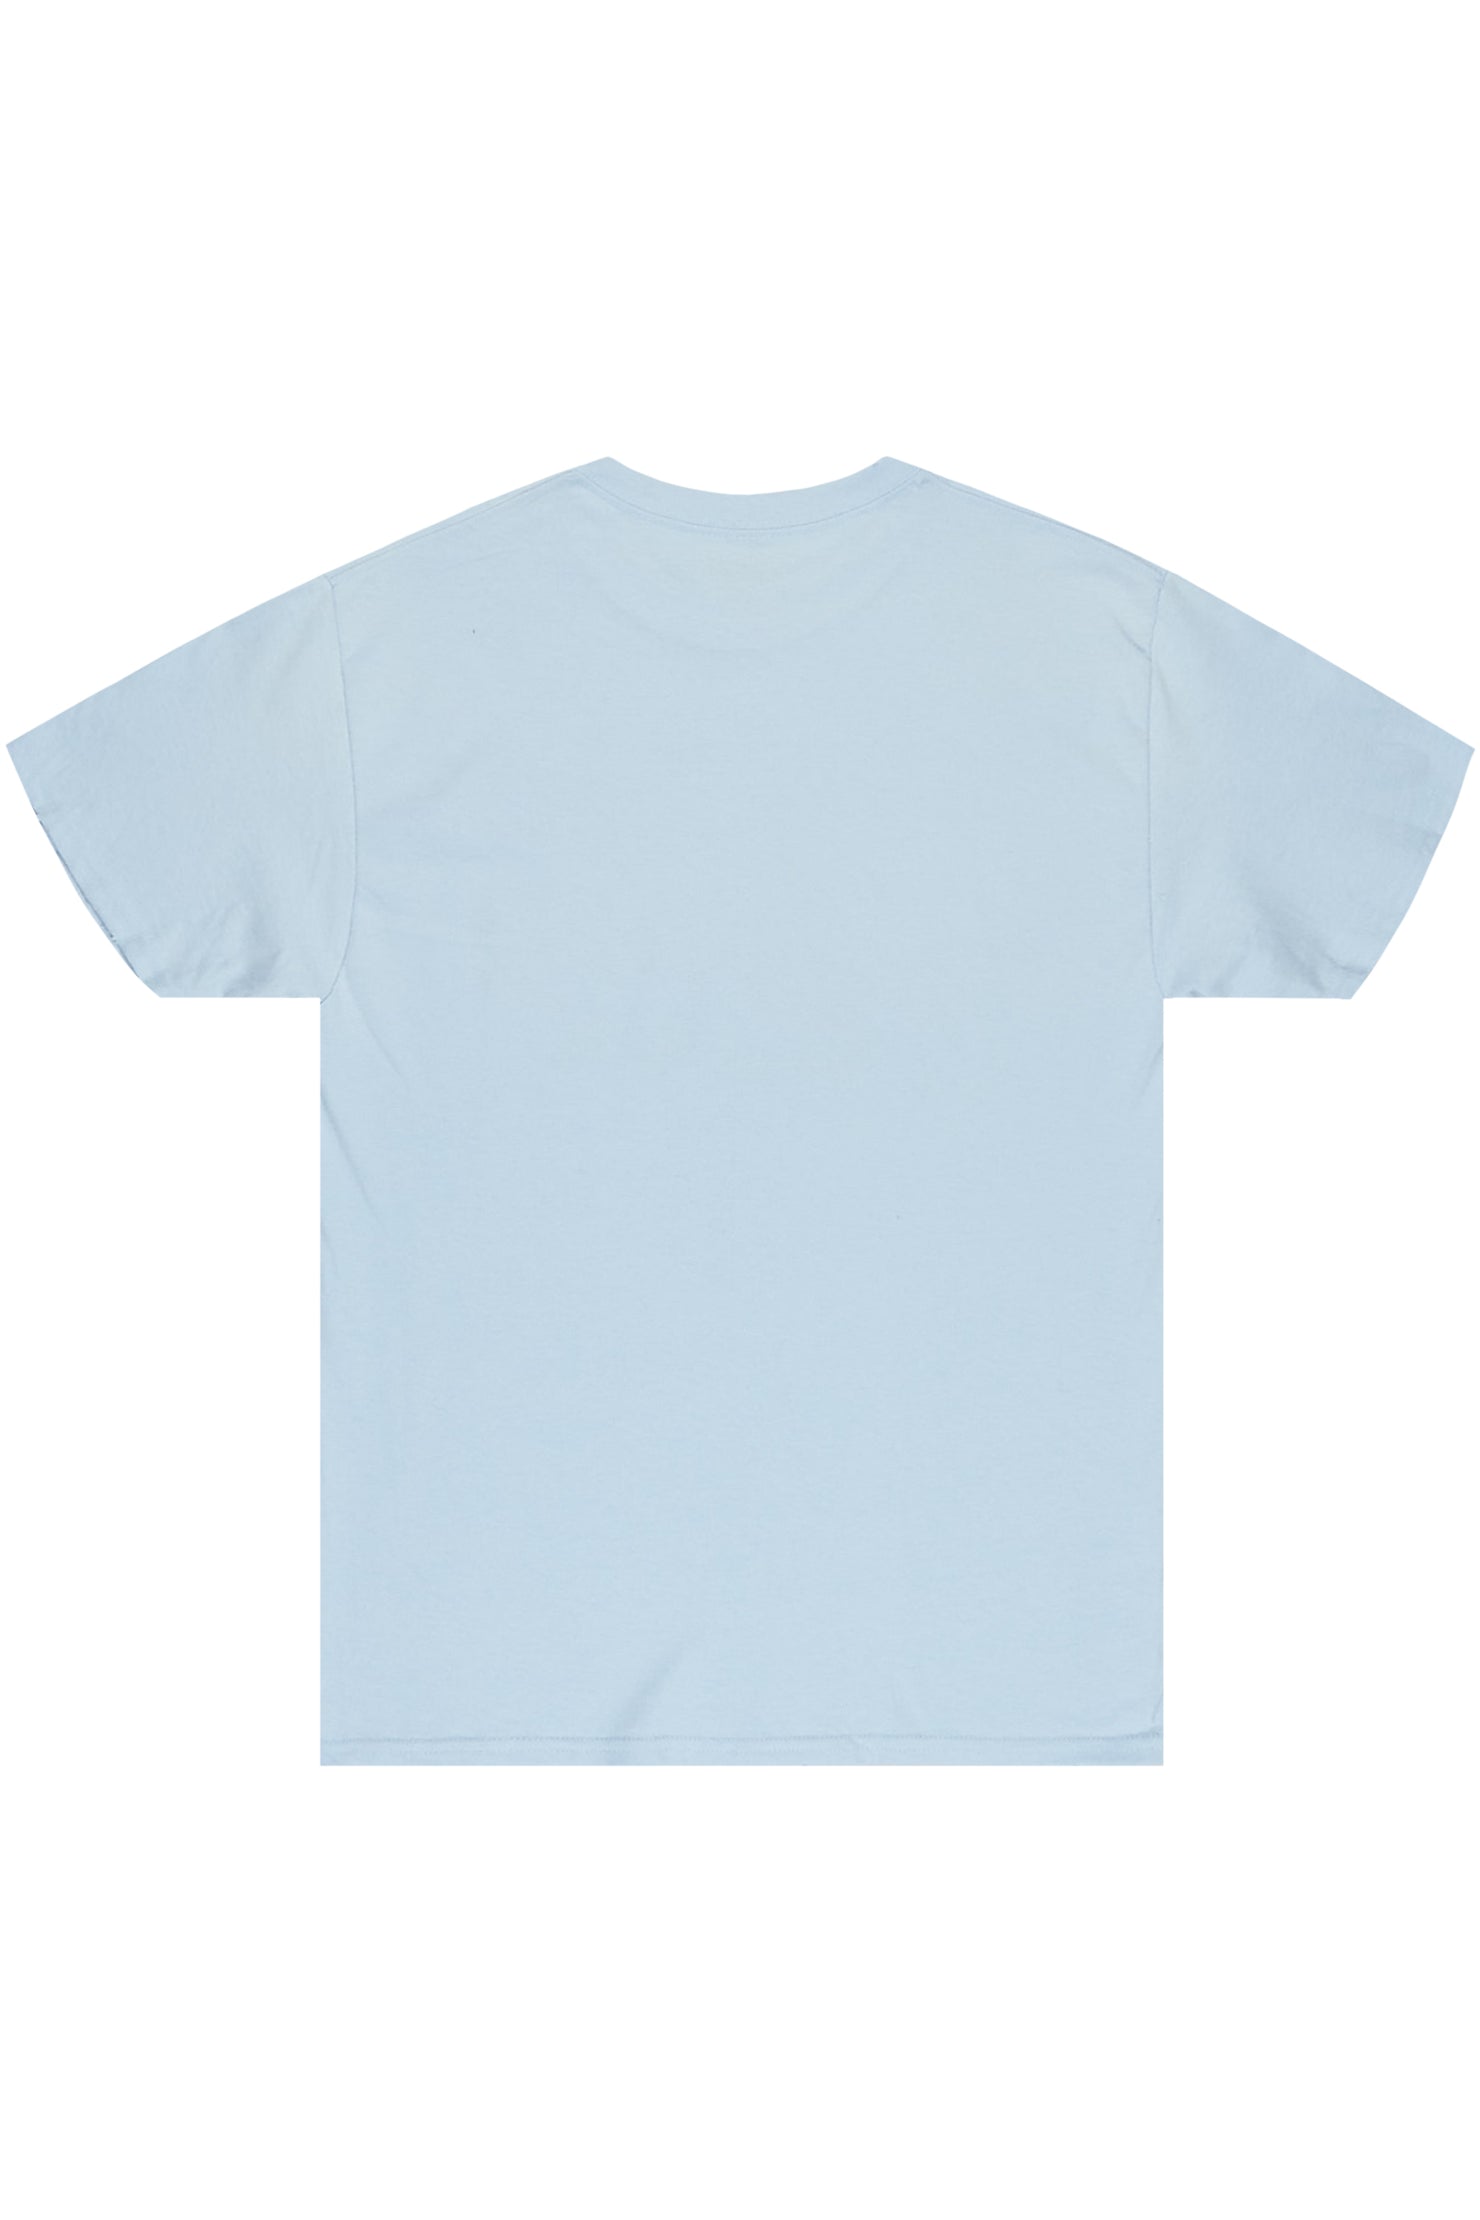 Blue Rockstar Graphic Light Original Zustrand T-Shirt–